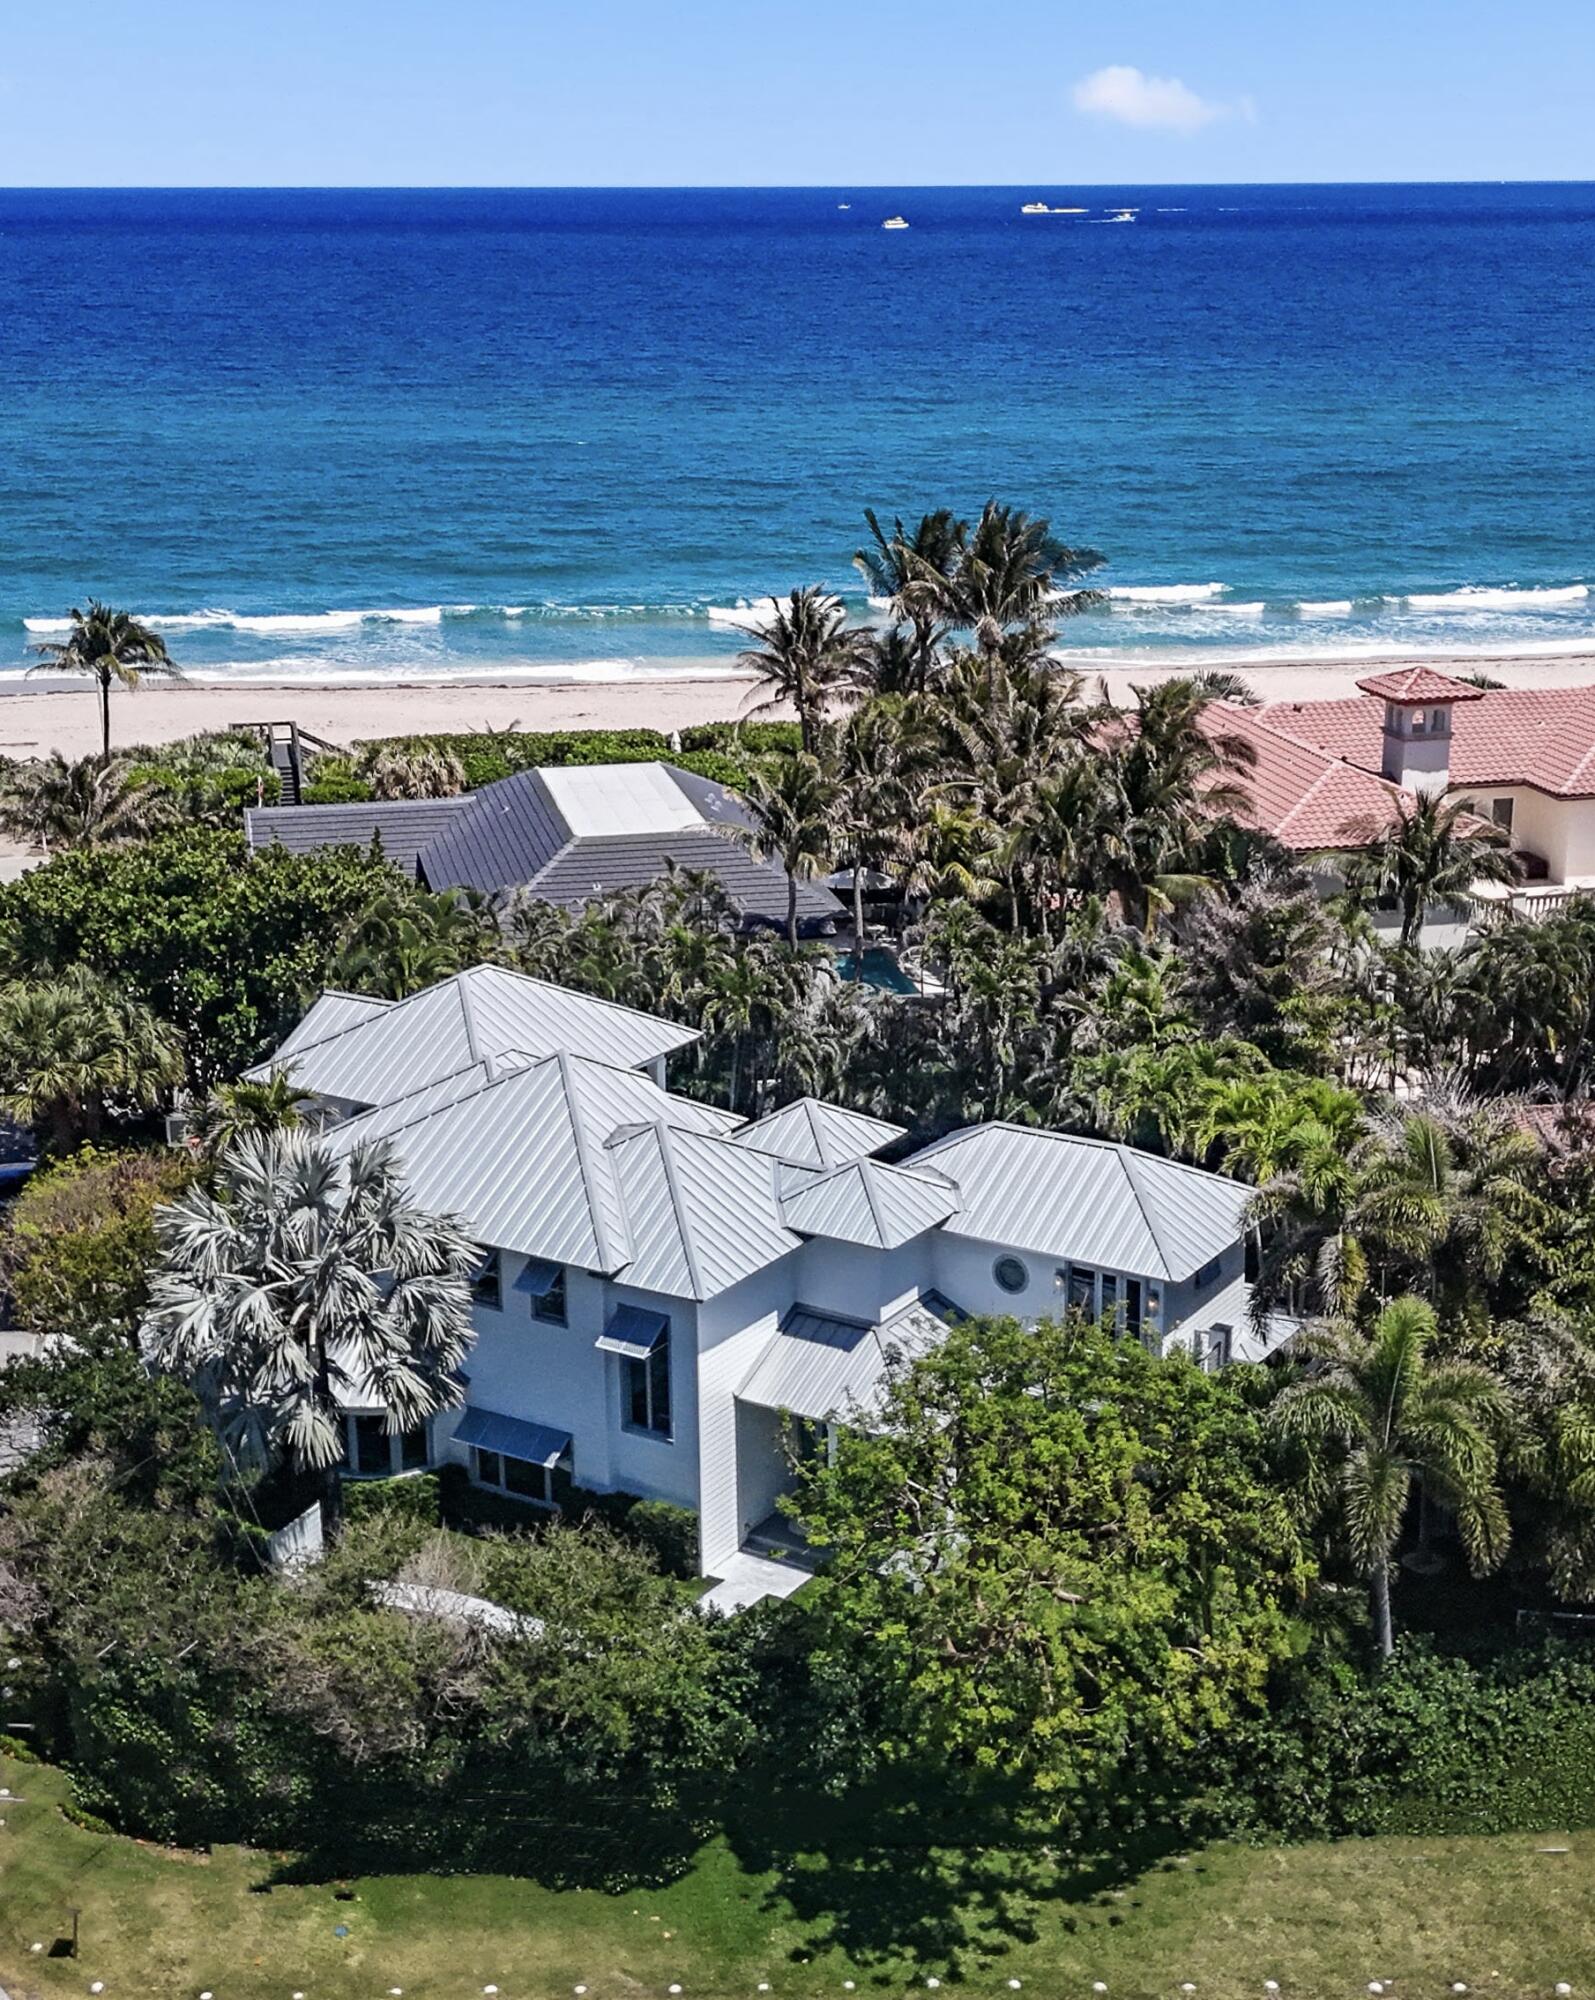 Property for Sale at 5907 N Ocean Boulevard, Ocean Ridge, Palm Beach County, Florida - Bedrooms: 4 
Bathrooms: 4  - $4,950,000